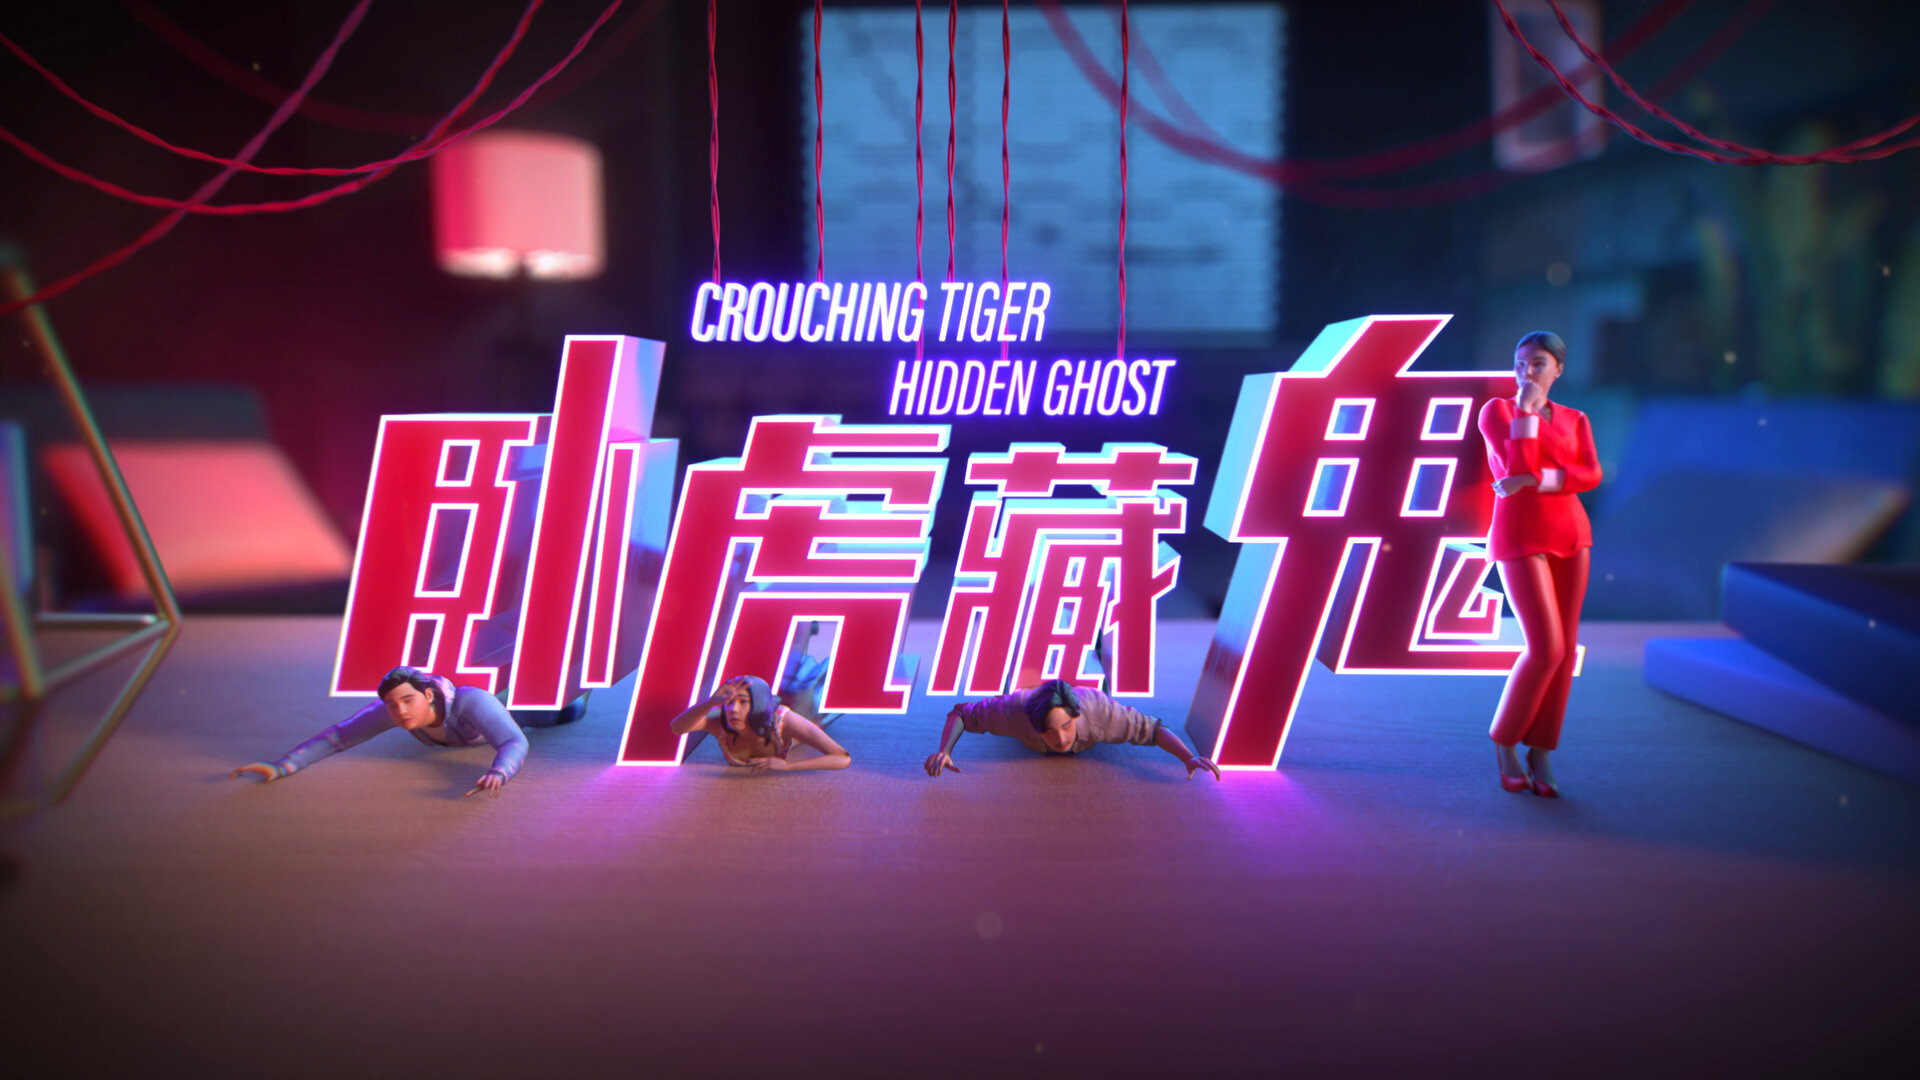 Show Crouching Tiger Hidden Ghost